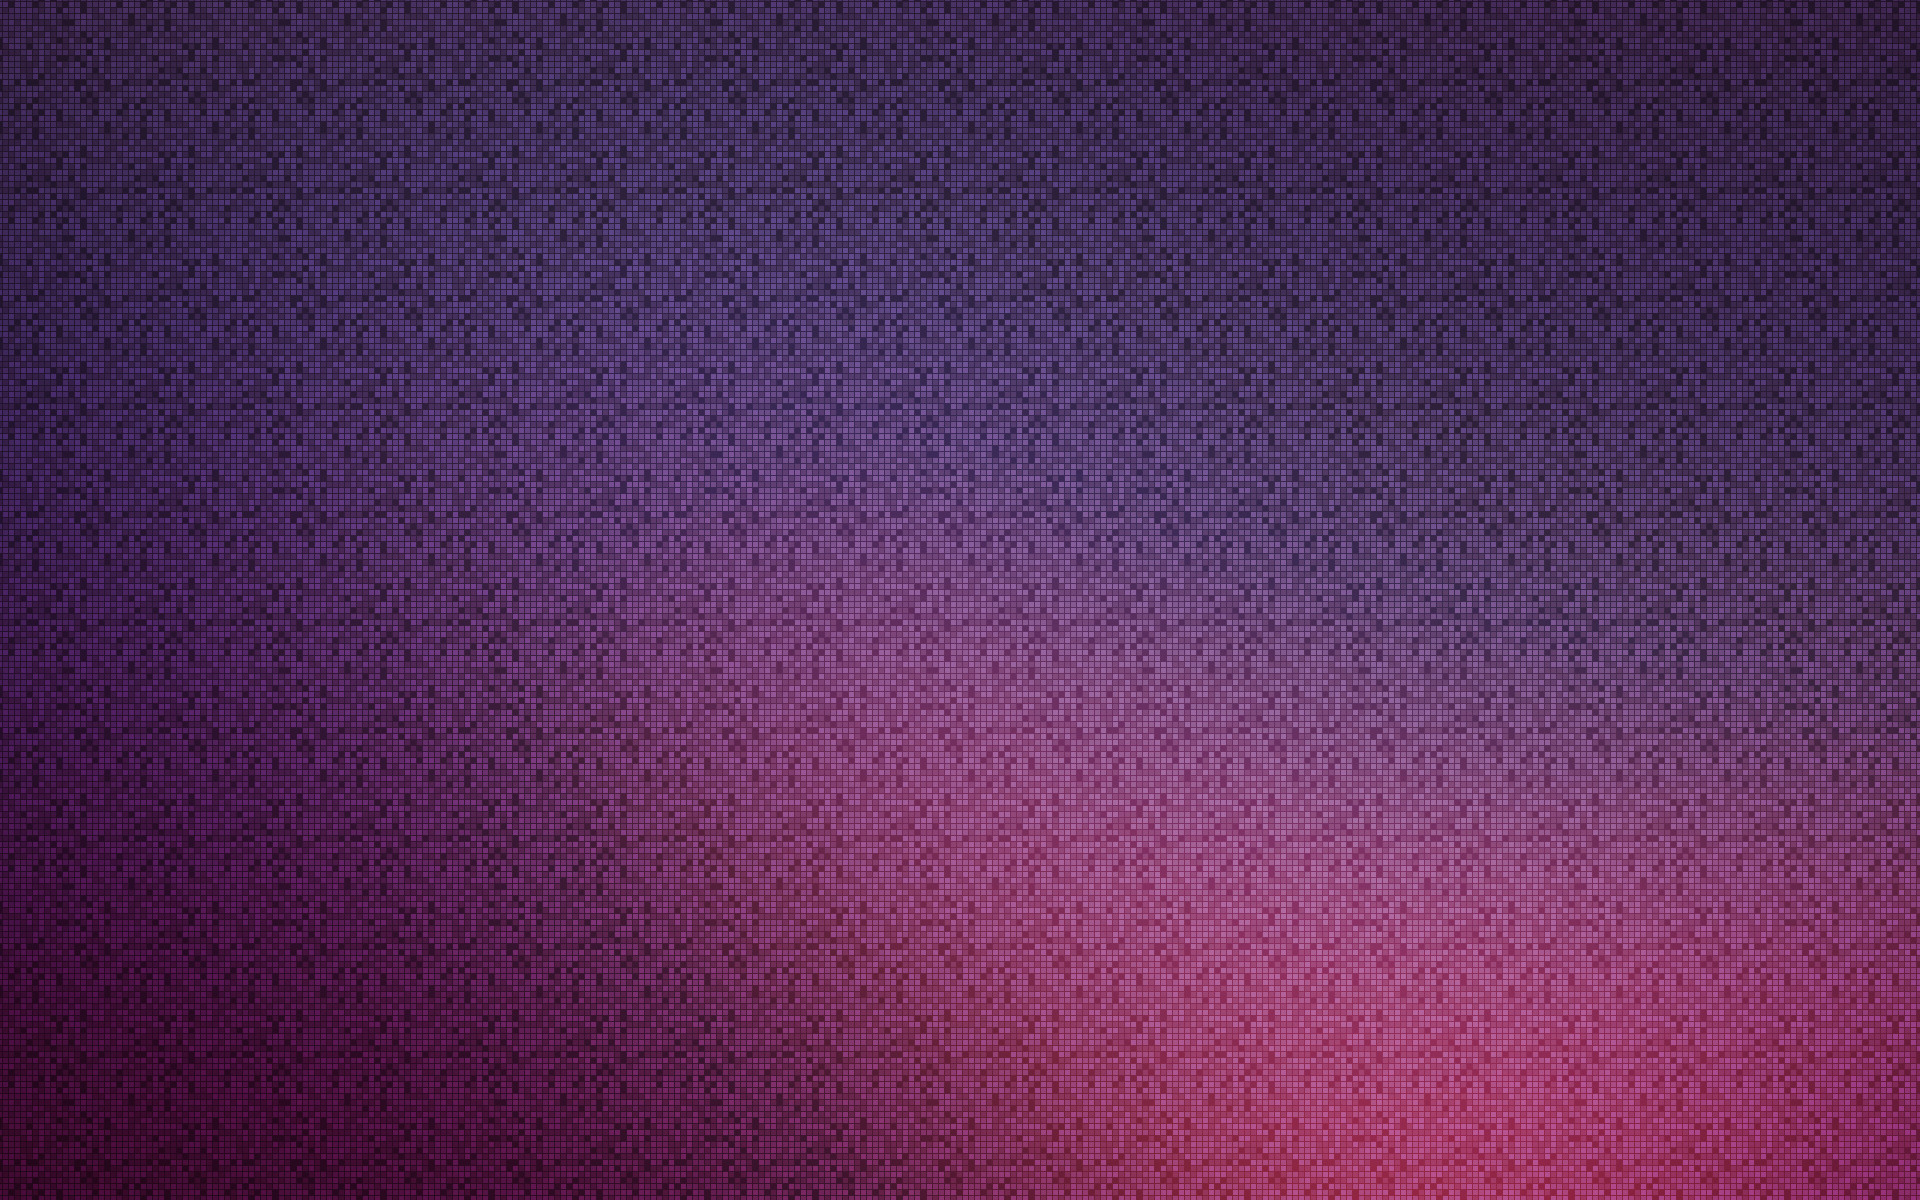 1920x1200 Paint Color Splash Background Wallpaper for desktop and mobile in .